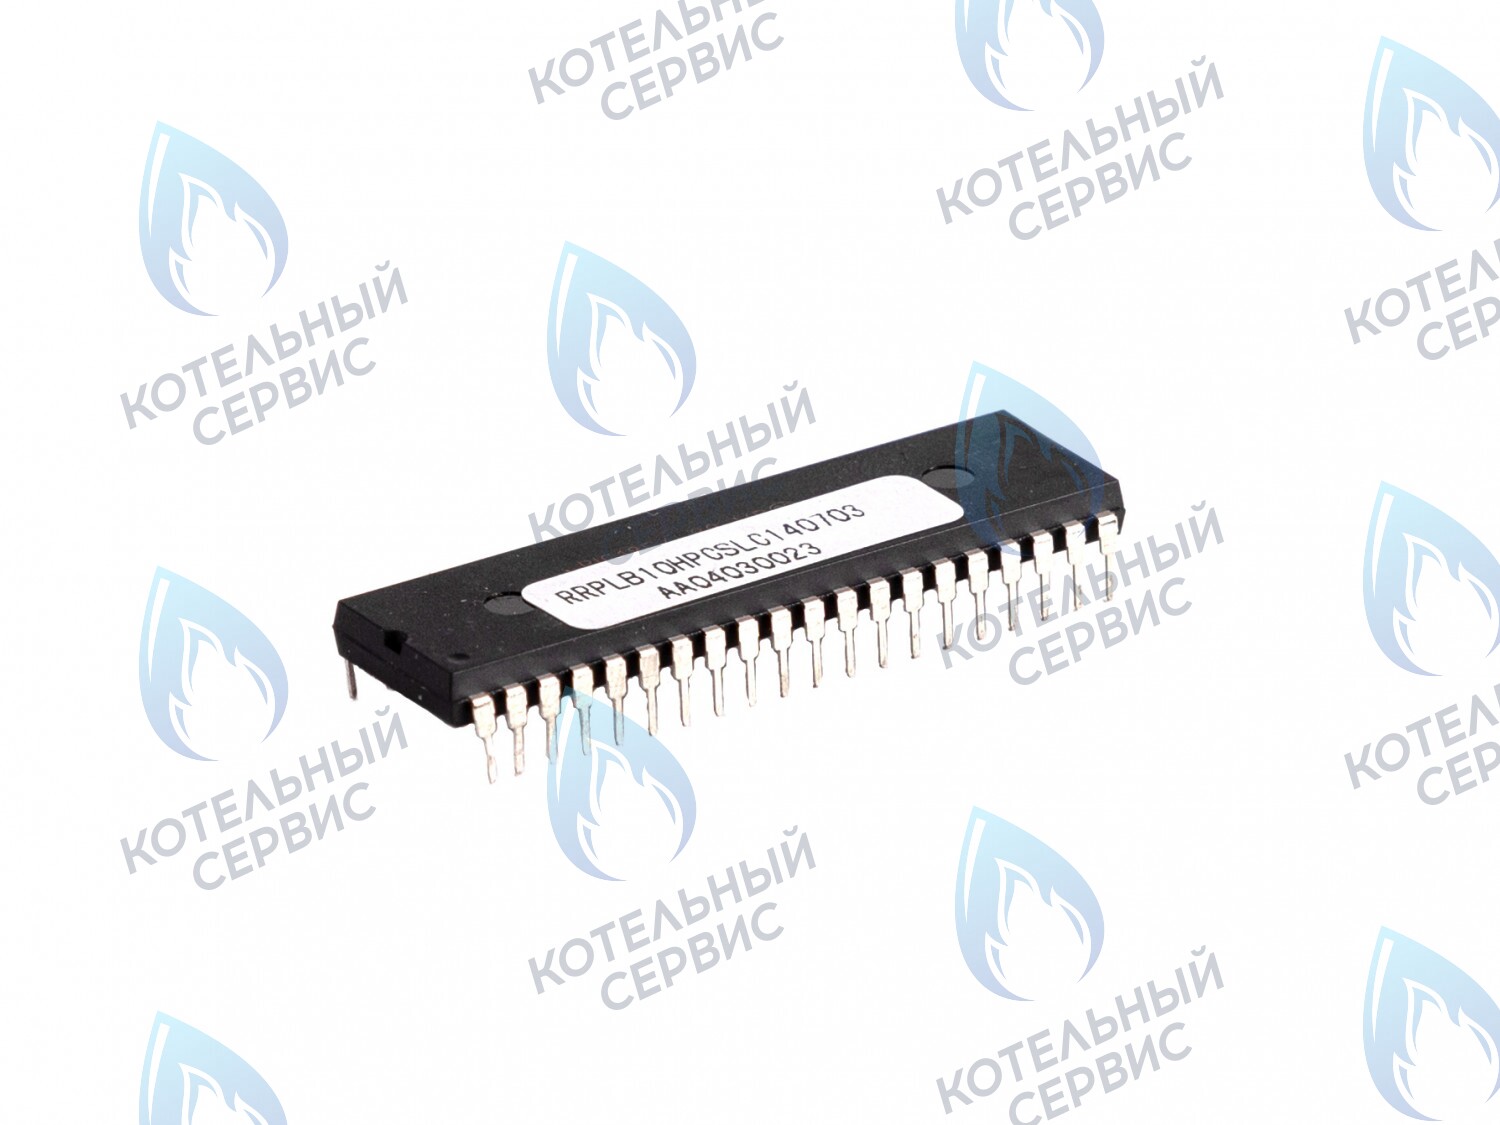 1310026B Процессор ELECTROLUX GBC Basic X 11/18/24 Fi, Basic Duo 24/30 Fi  Битерм. теплообменник, закр. камера сгорания  RRPLB10HPCSLC 140703 (1310026B, AA04030023) в Барнауле